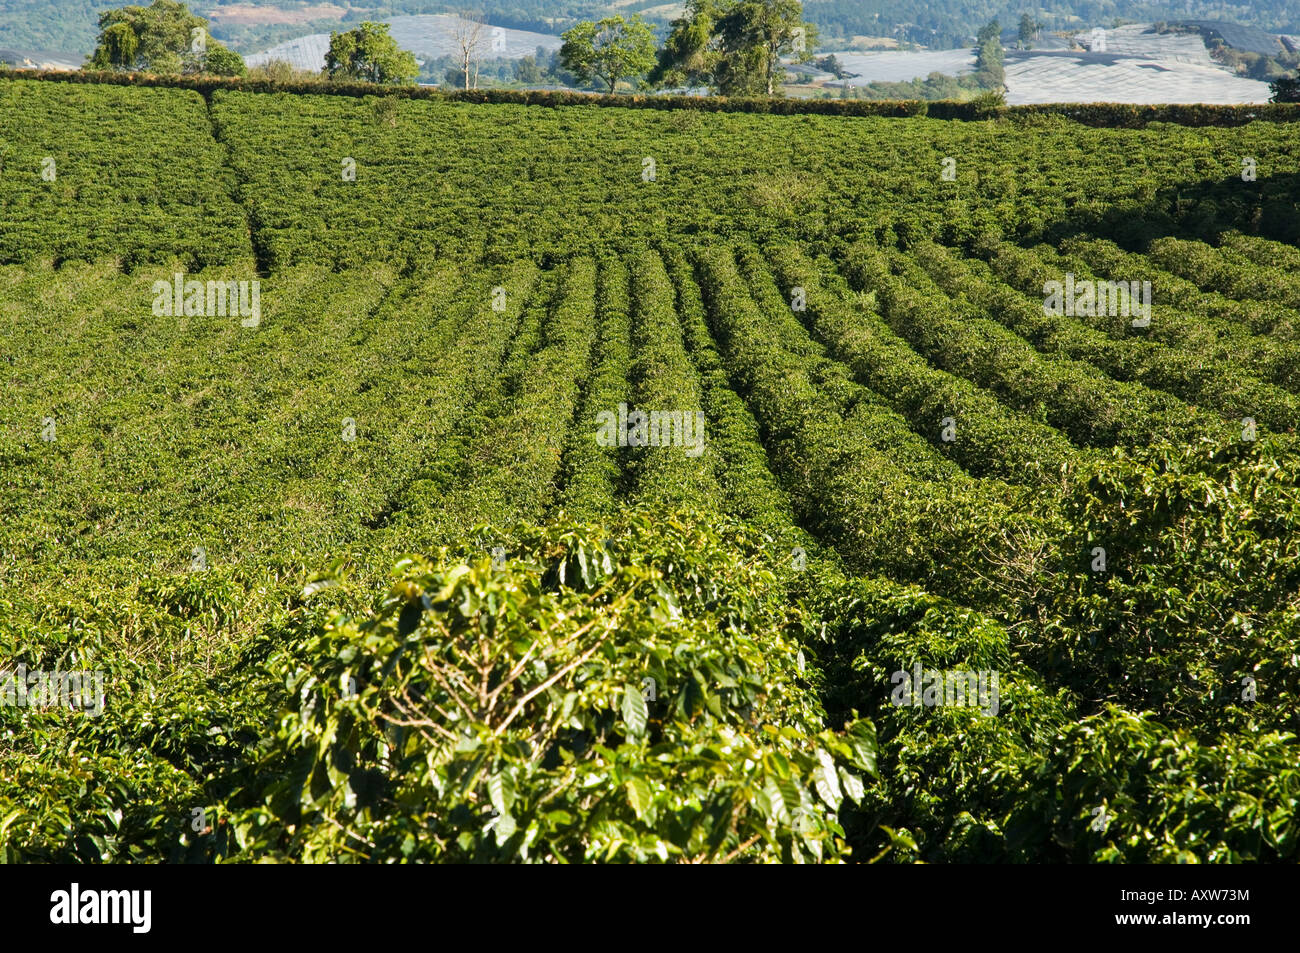 Coffee plantations on the slopes of the Poas Volcano, near San Jose, Costa Rica Stock Photo